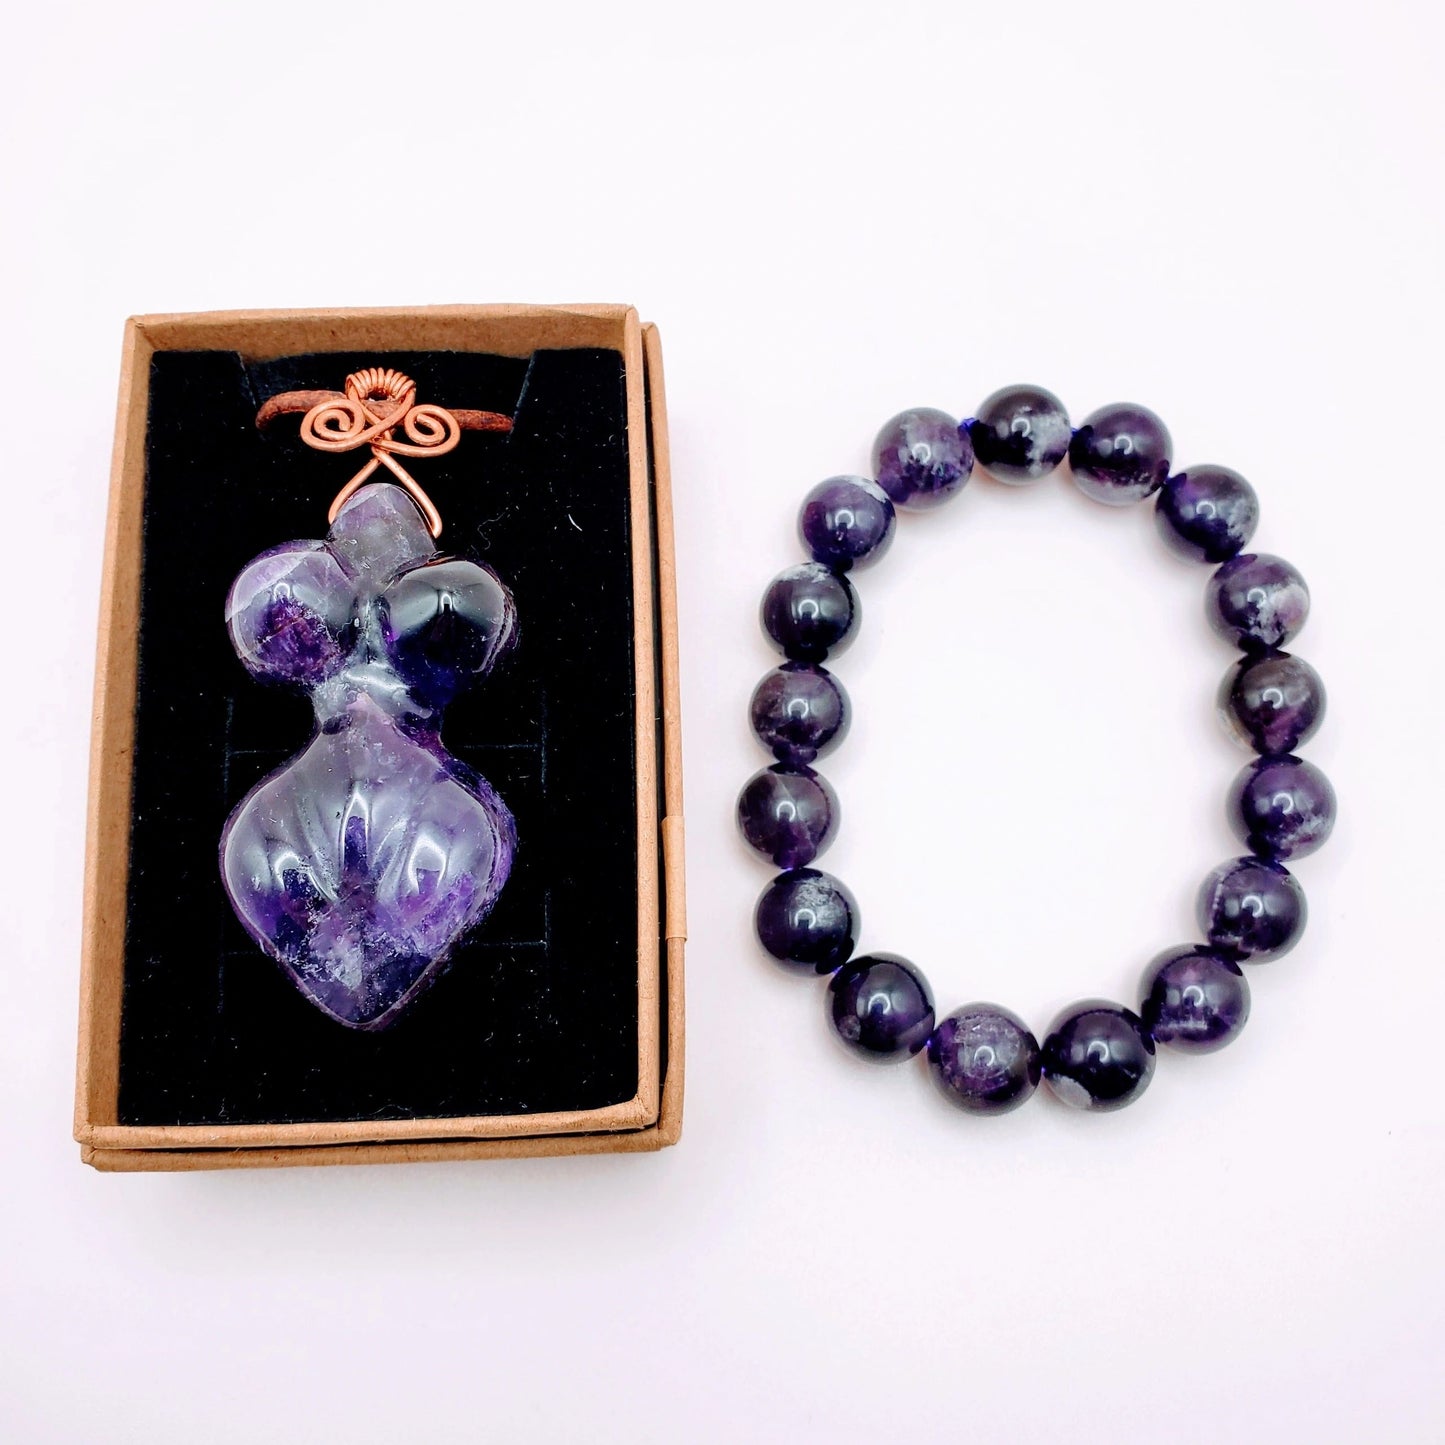 "Goddess" | Amethyst Necklace, Bracelet | intuition, spiritual awakening and growth